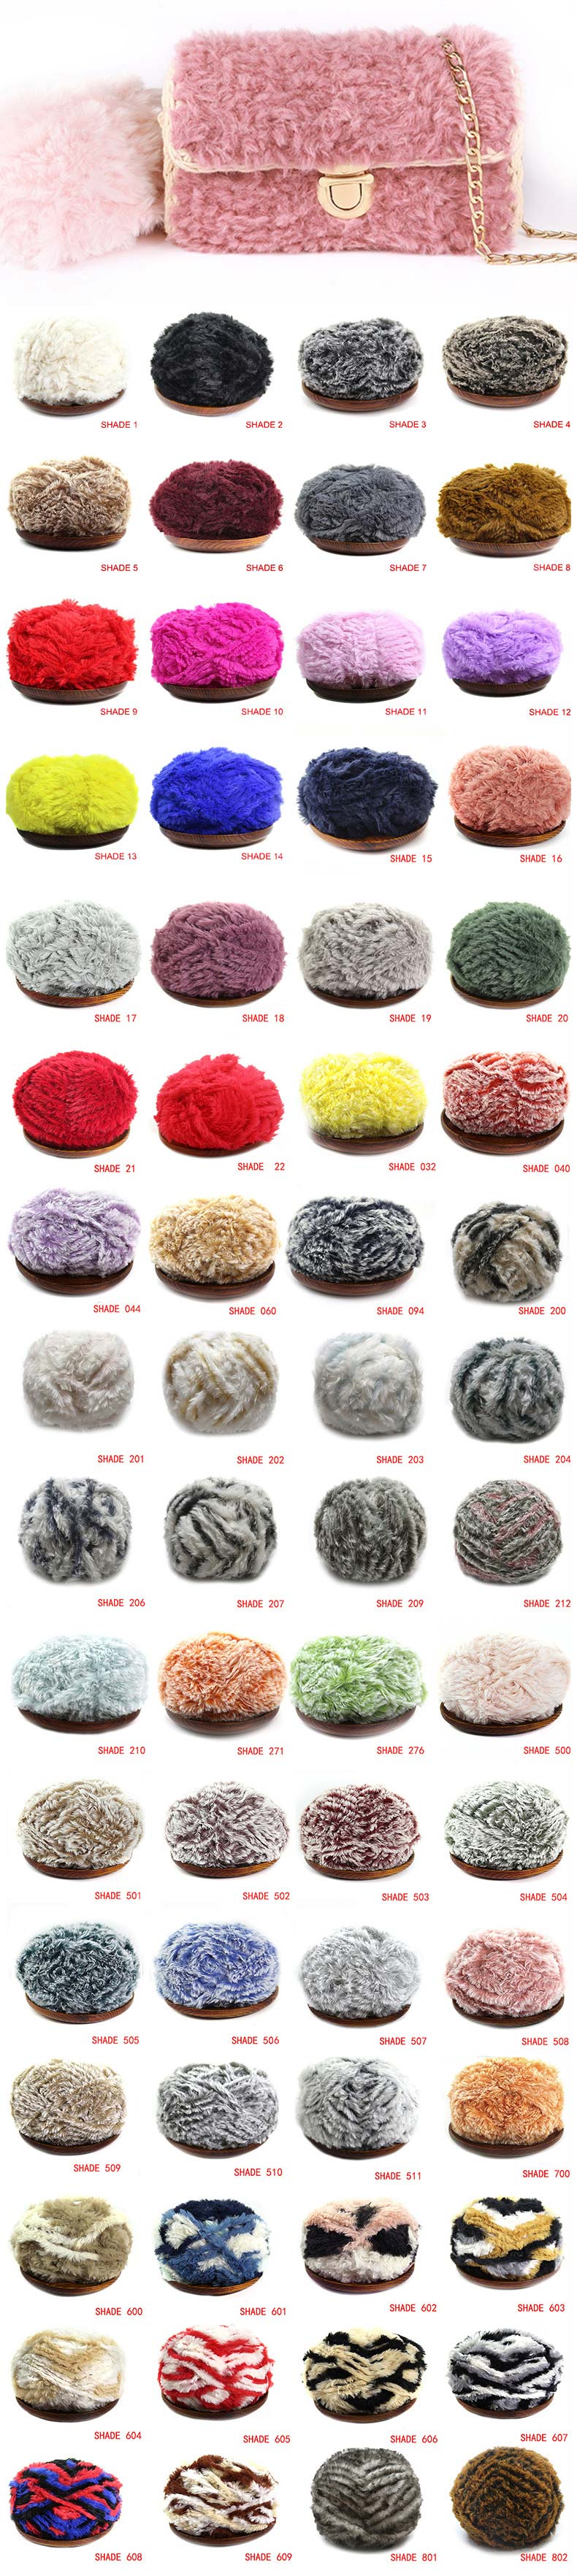 Fur knitting yarn